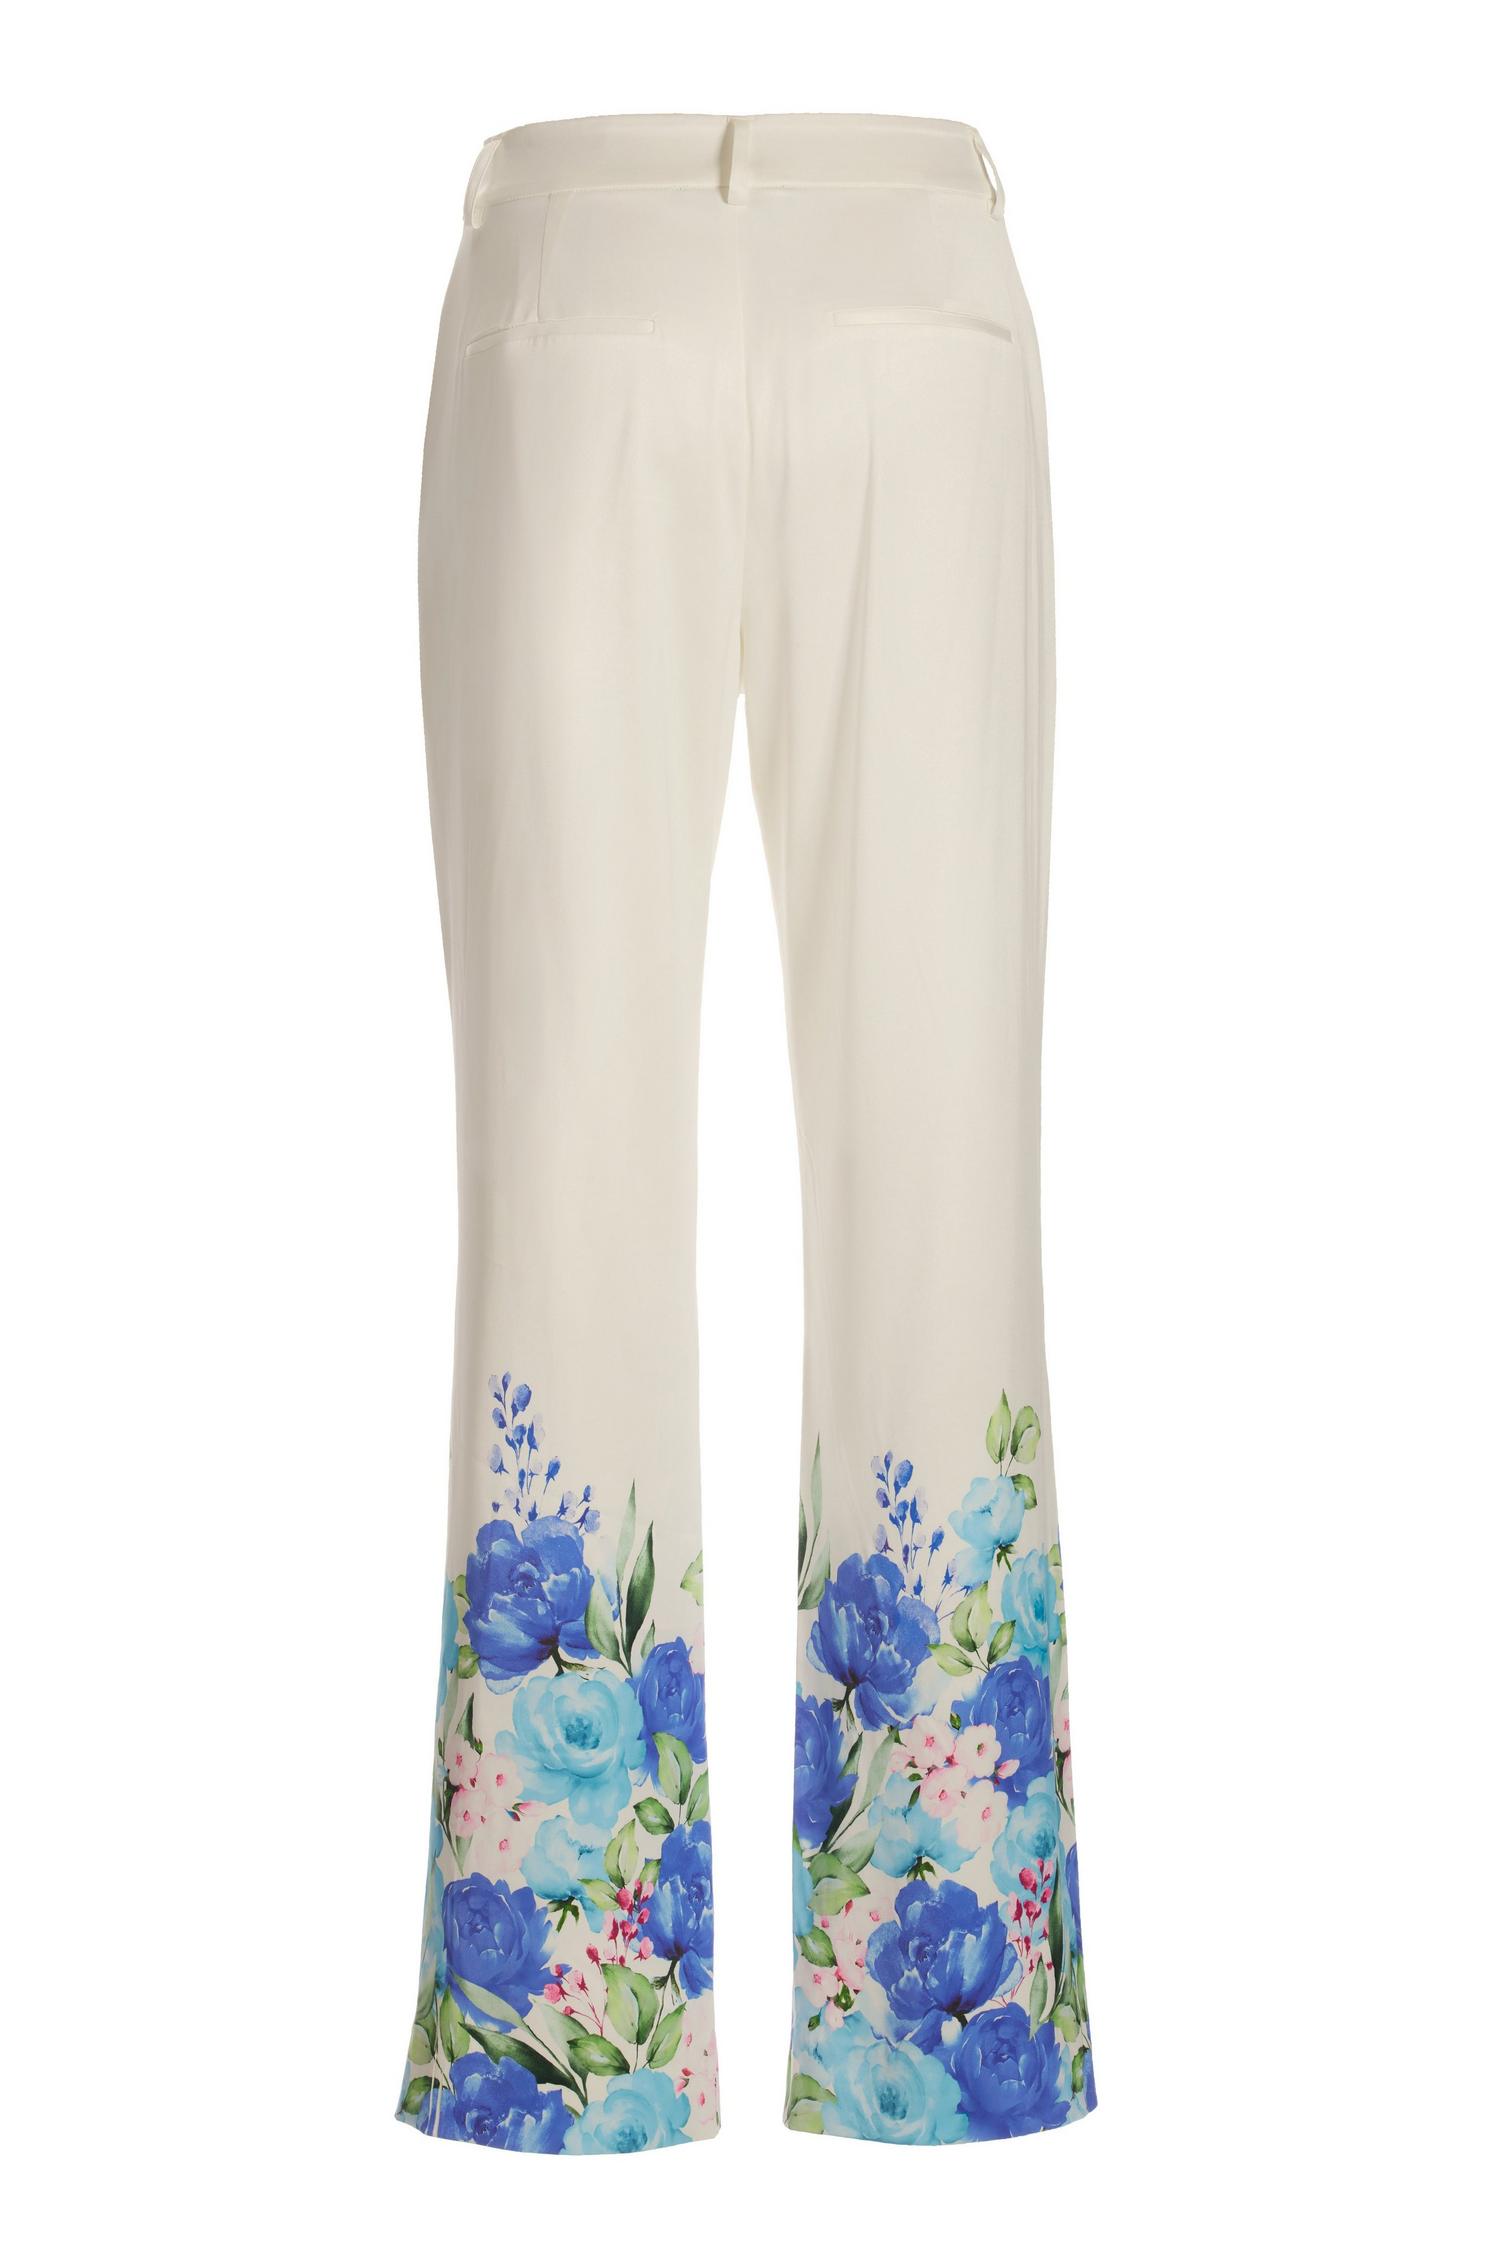 Garden Fete Floral Print Trouser - White/Blue Multicolor | Boston